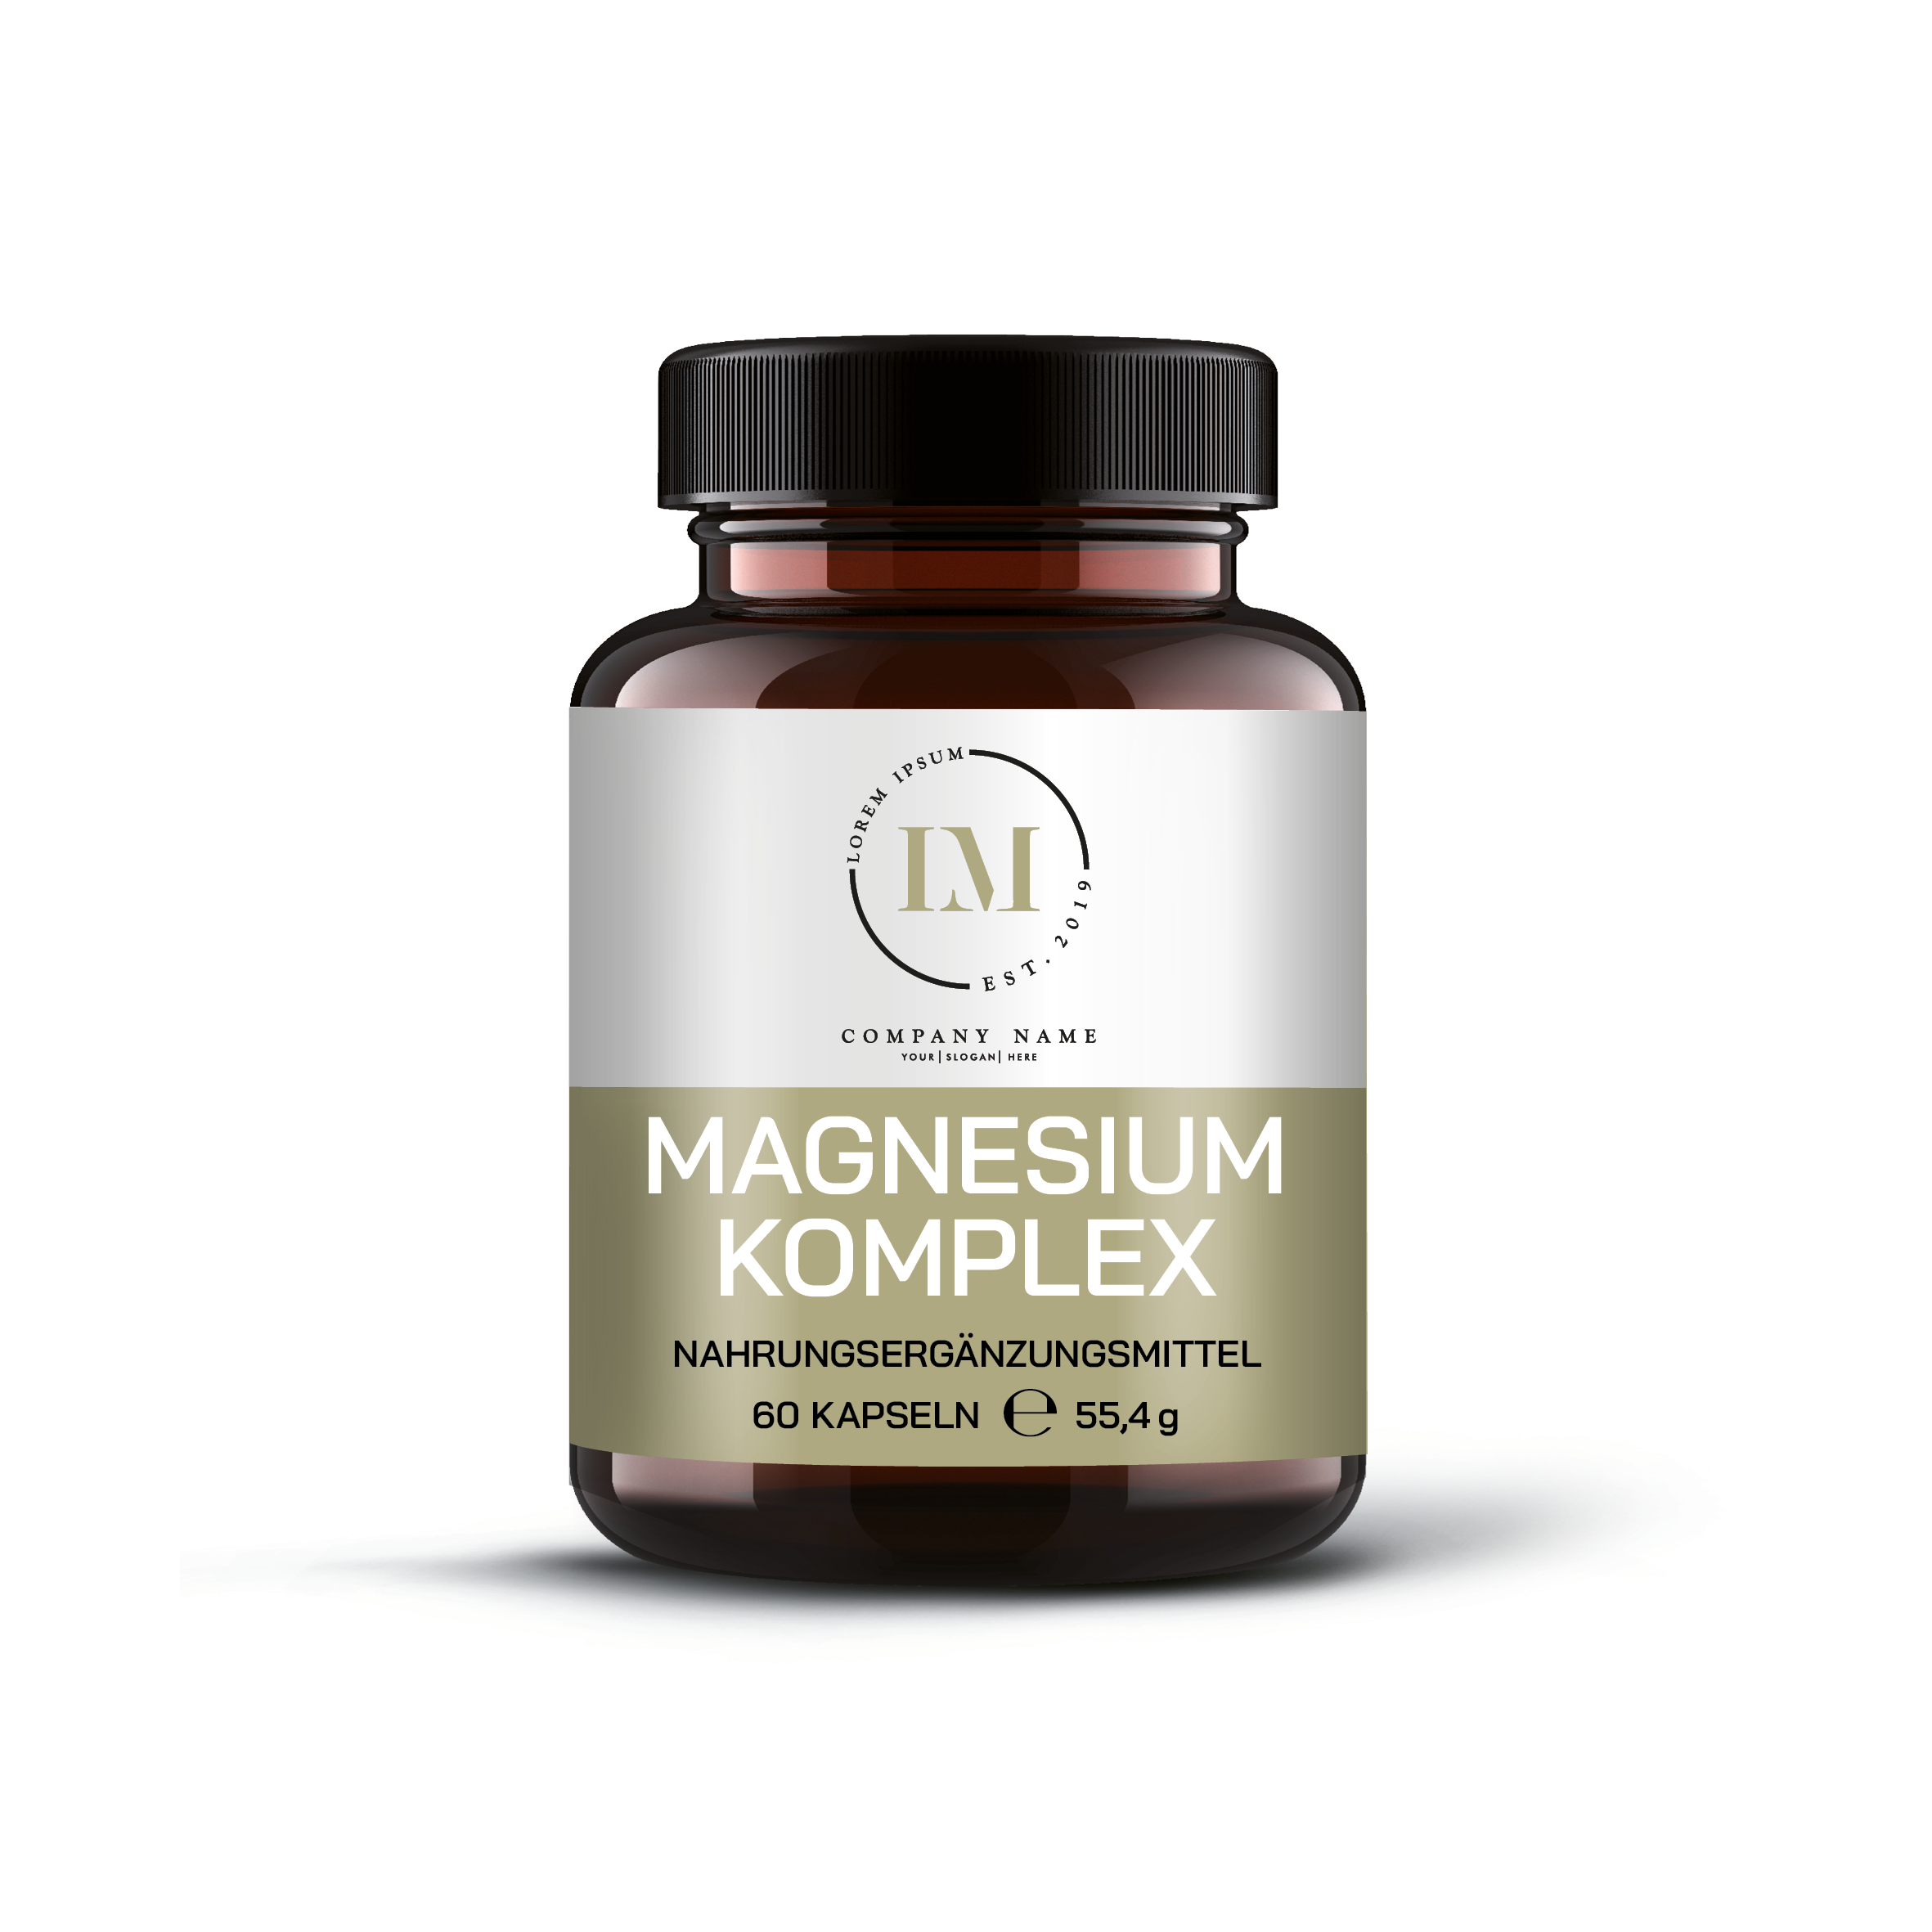 Life Light Med_Magnesium Komplex